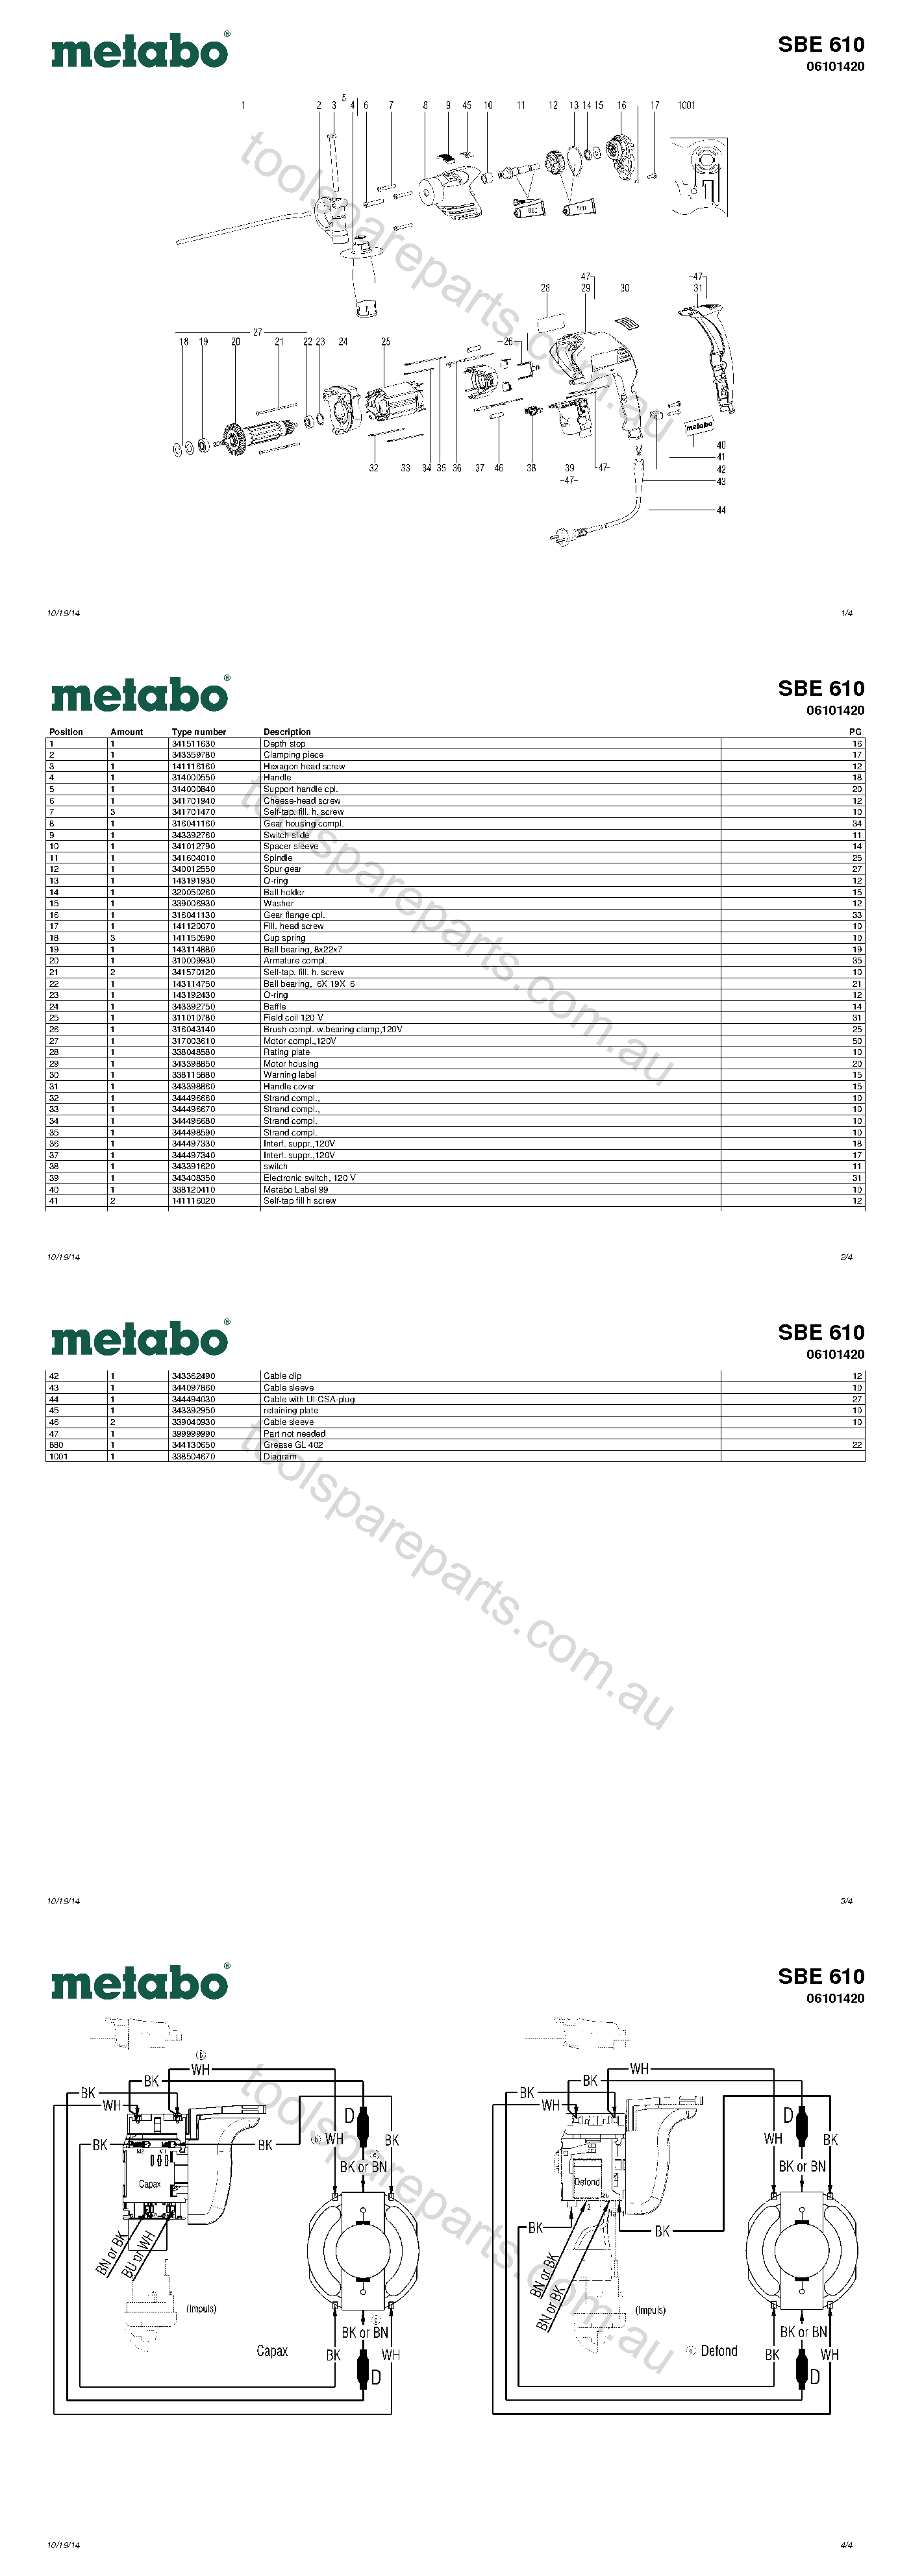 Metabo SBE 610 06101420  Diagram 1